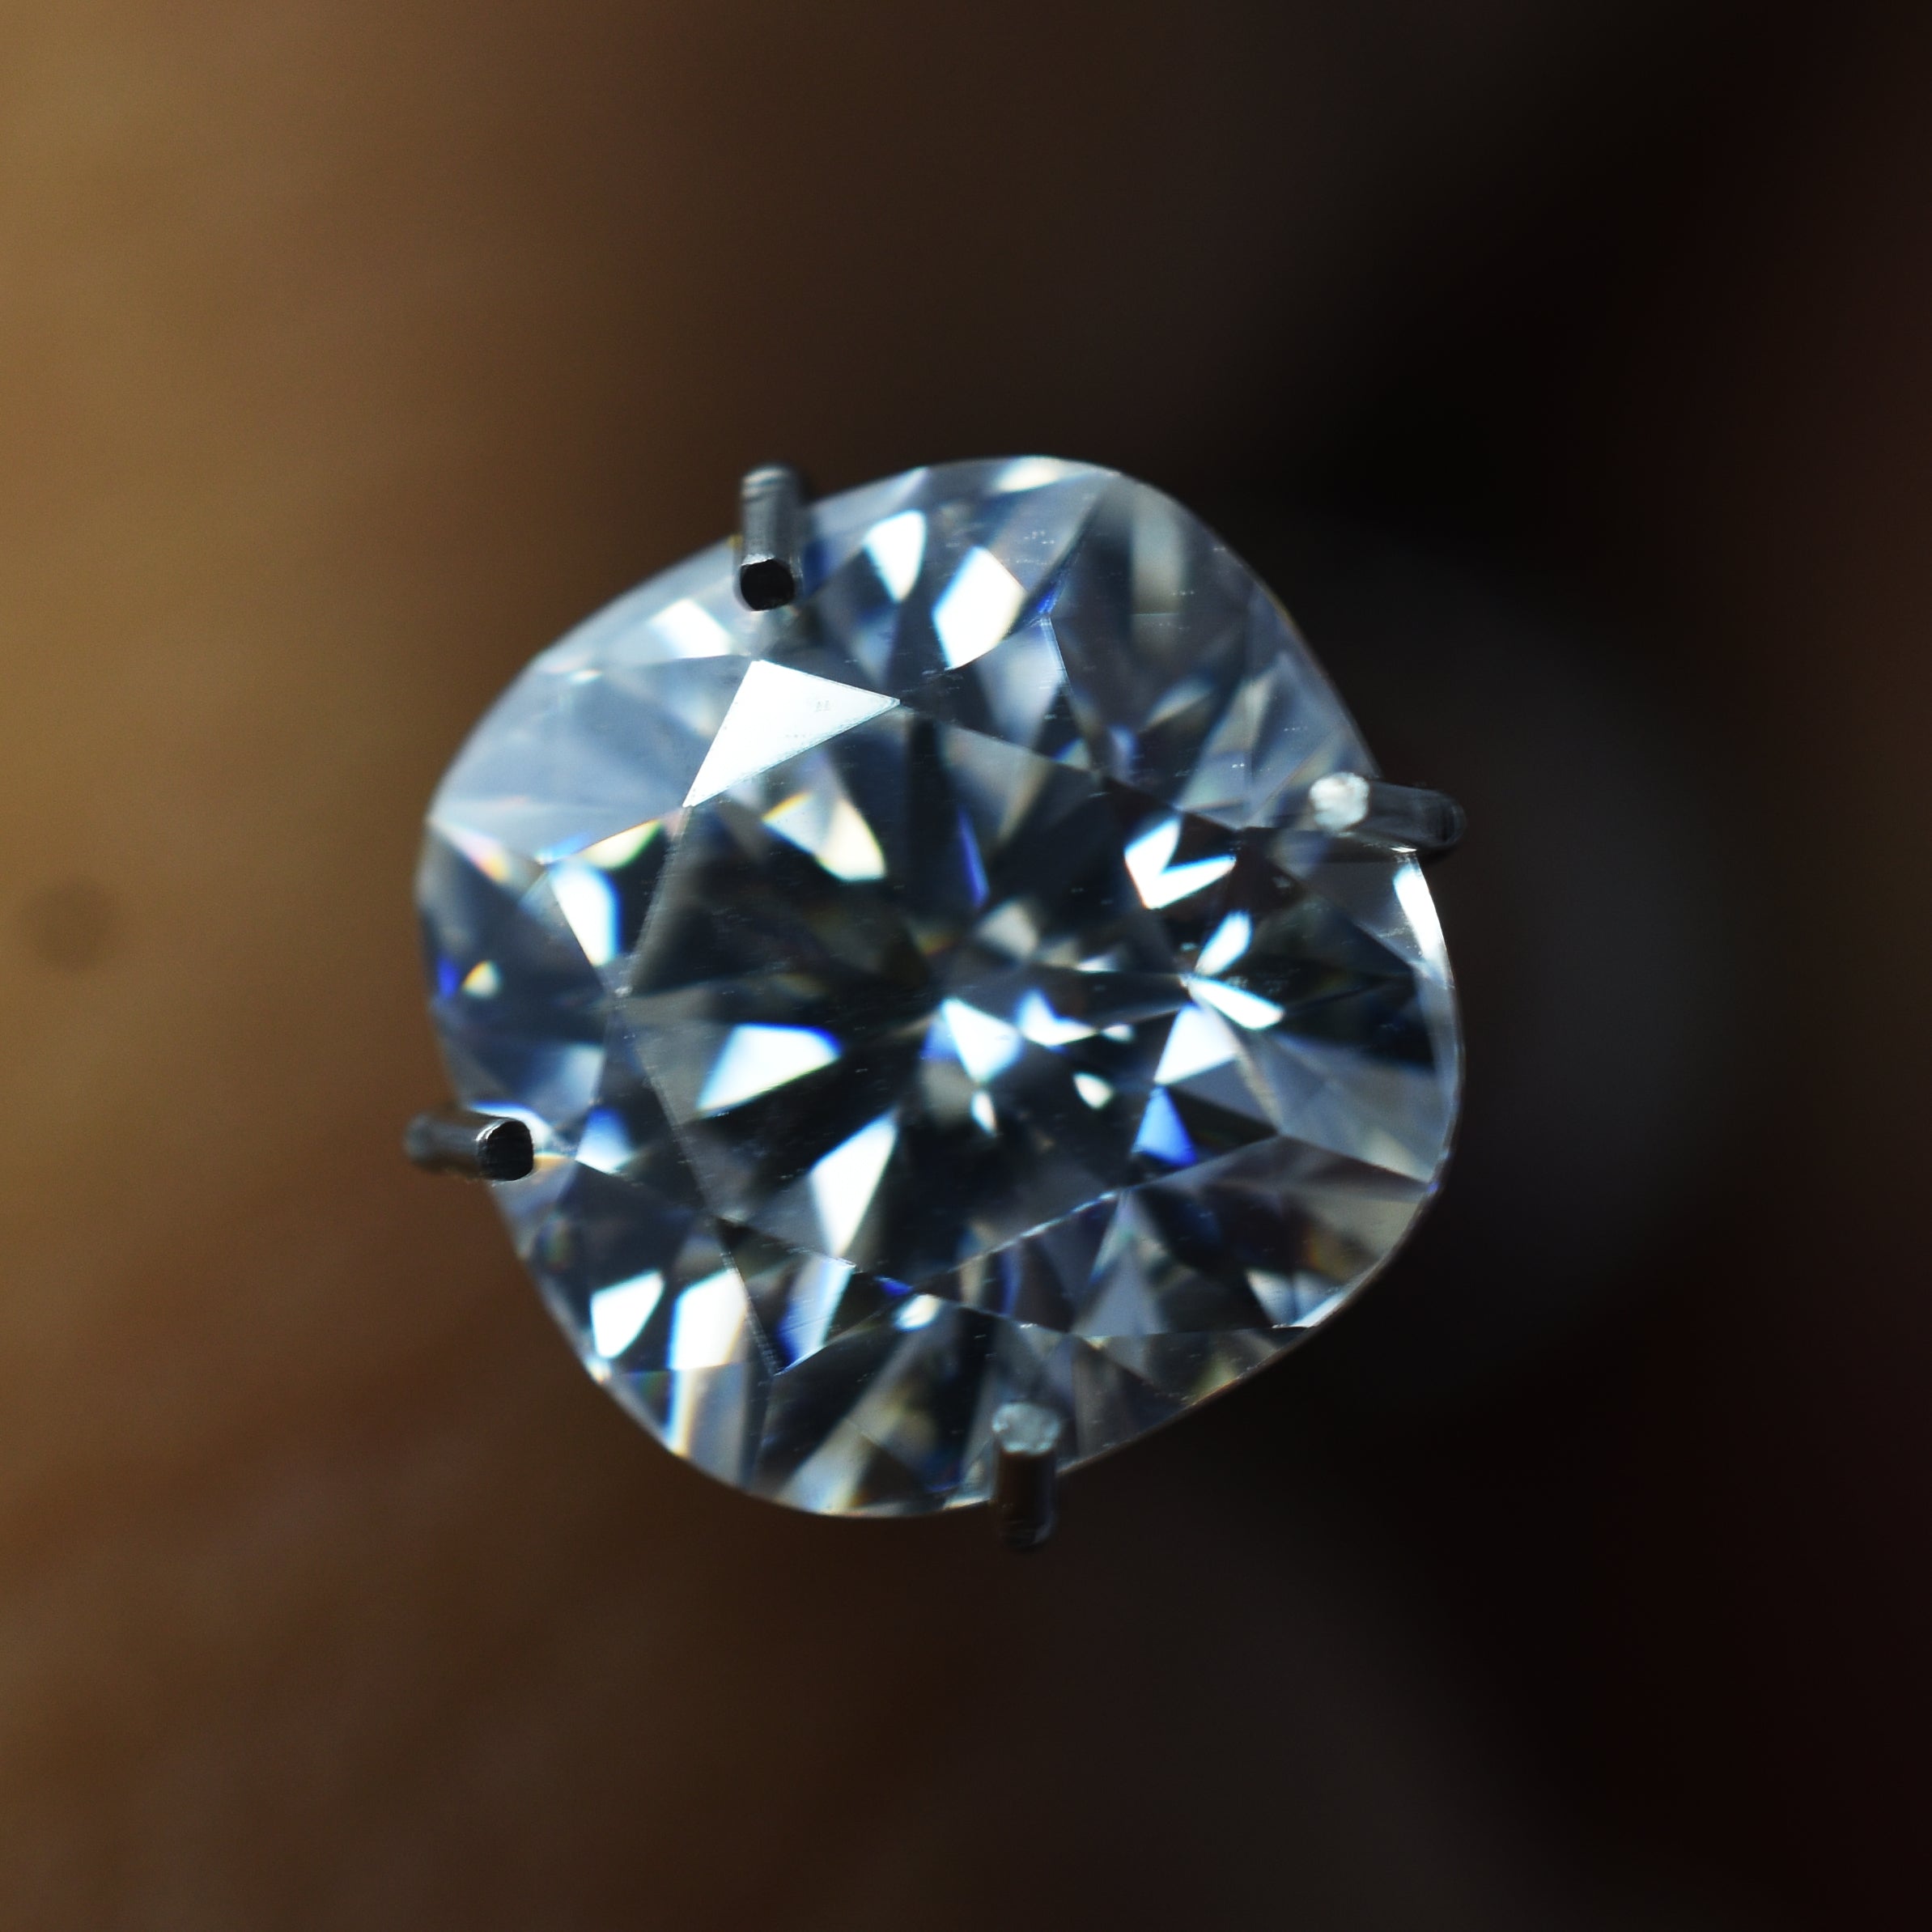 0.12 Ct Lab-Grown 3x3 MM Moissanite Certified VVS1 D Color Square Cushion Cut Diamond Excellent Cut Loose Gemstone